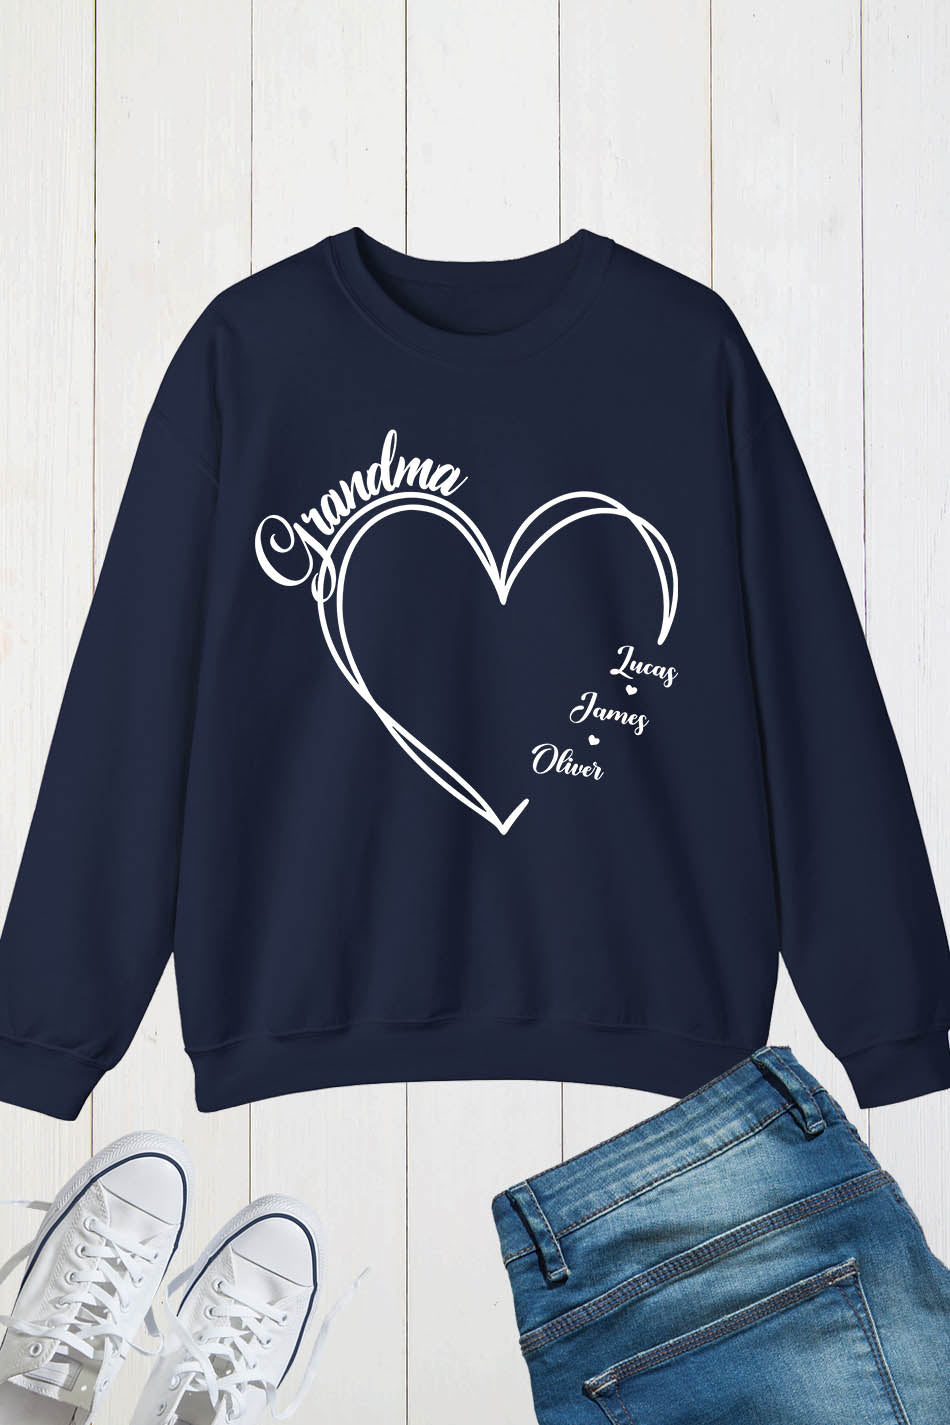 Custom Grandma Sweatshirt